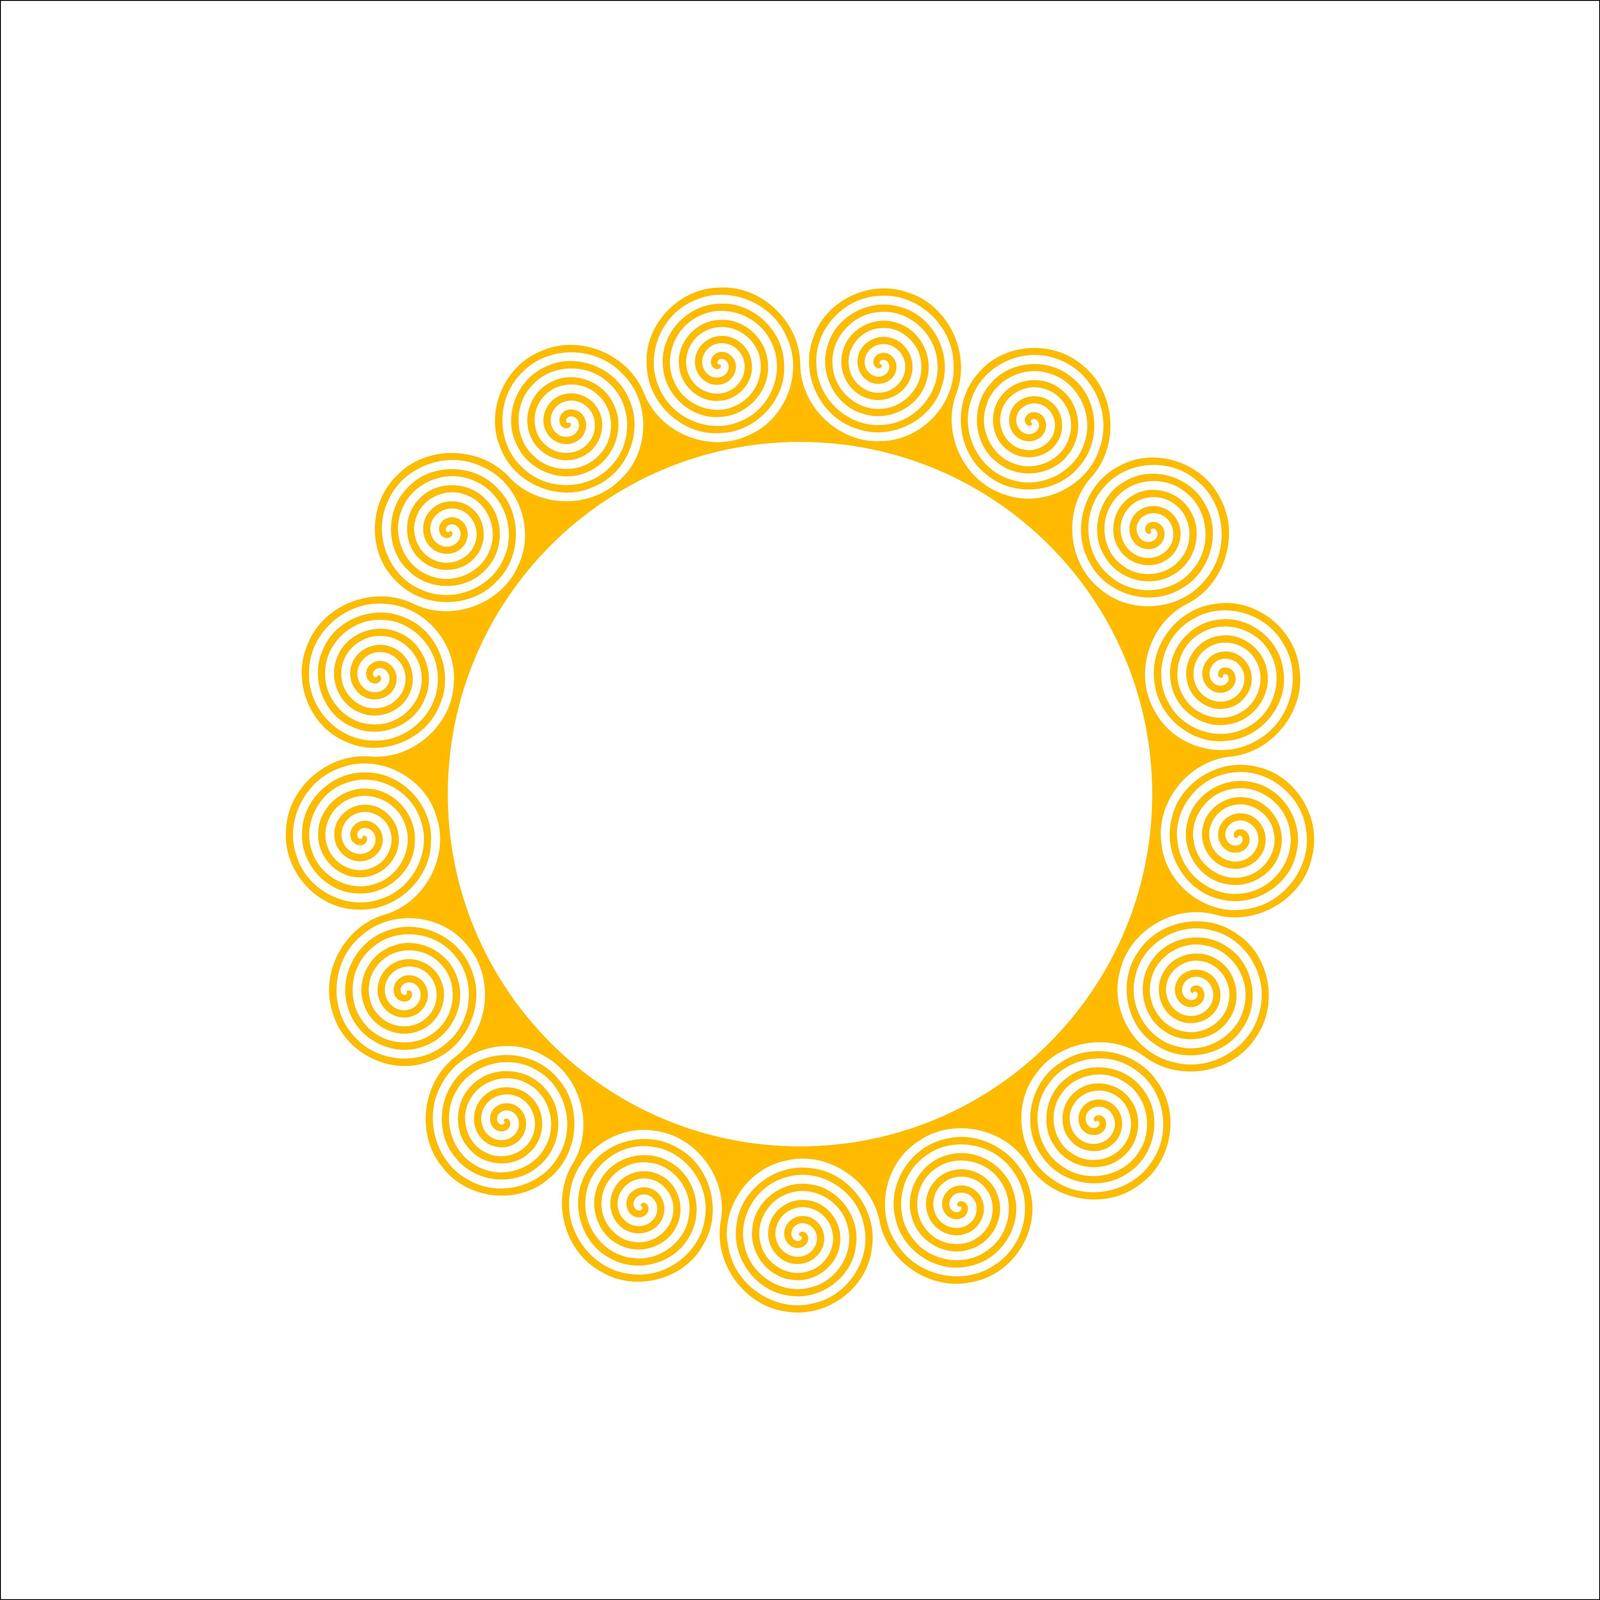 Sun tribal spiral rays logo. sunshine swirl concept. Stock Vector illustration isolated on white background. by Kyrylov